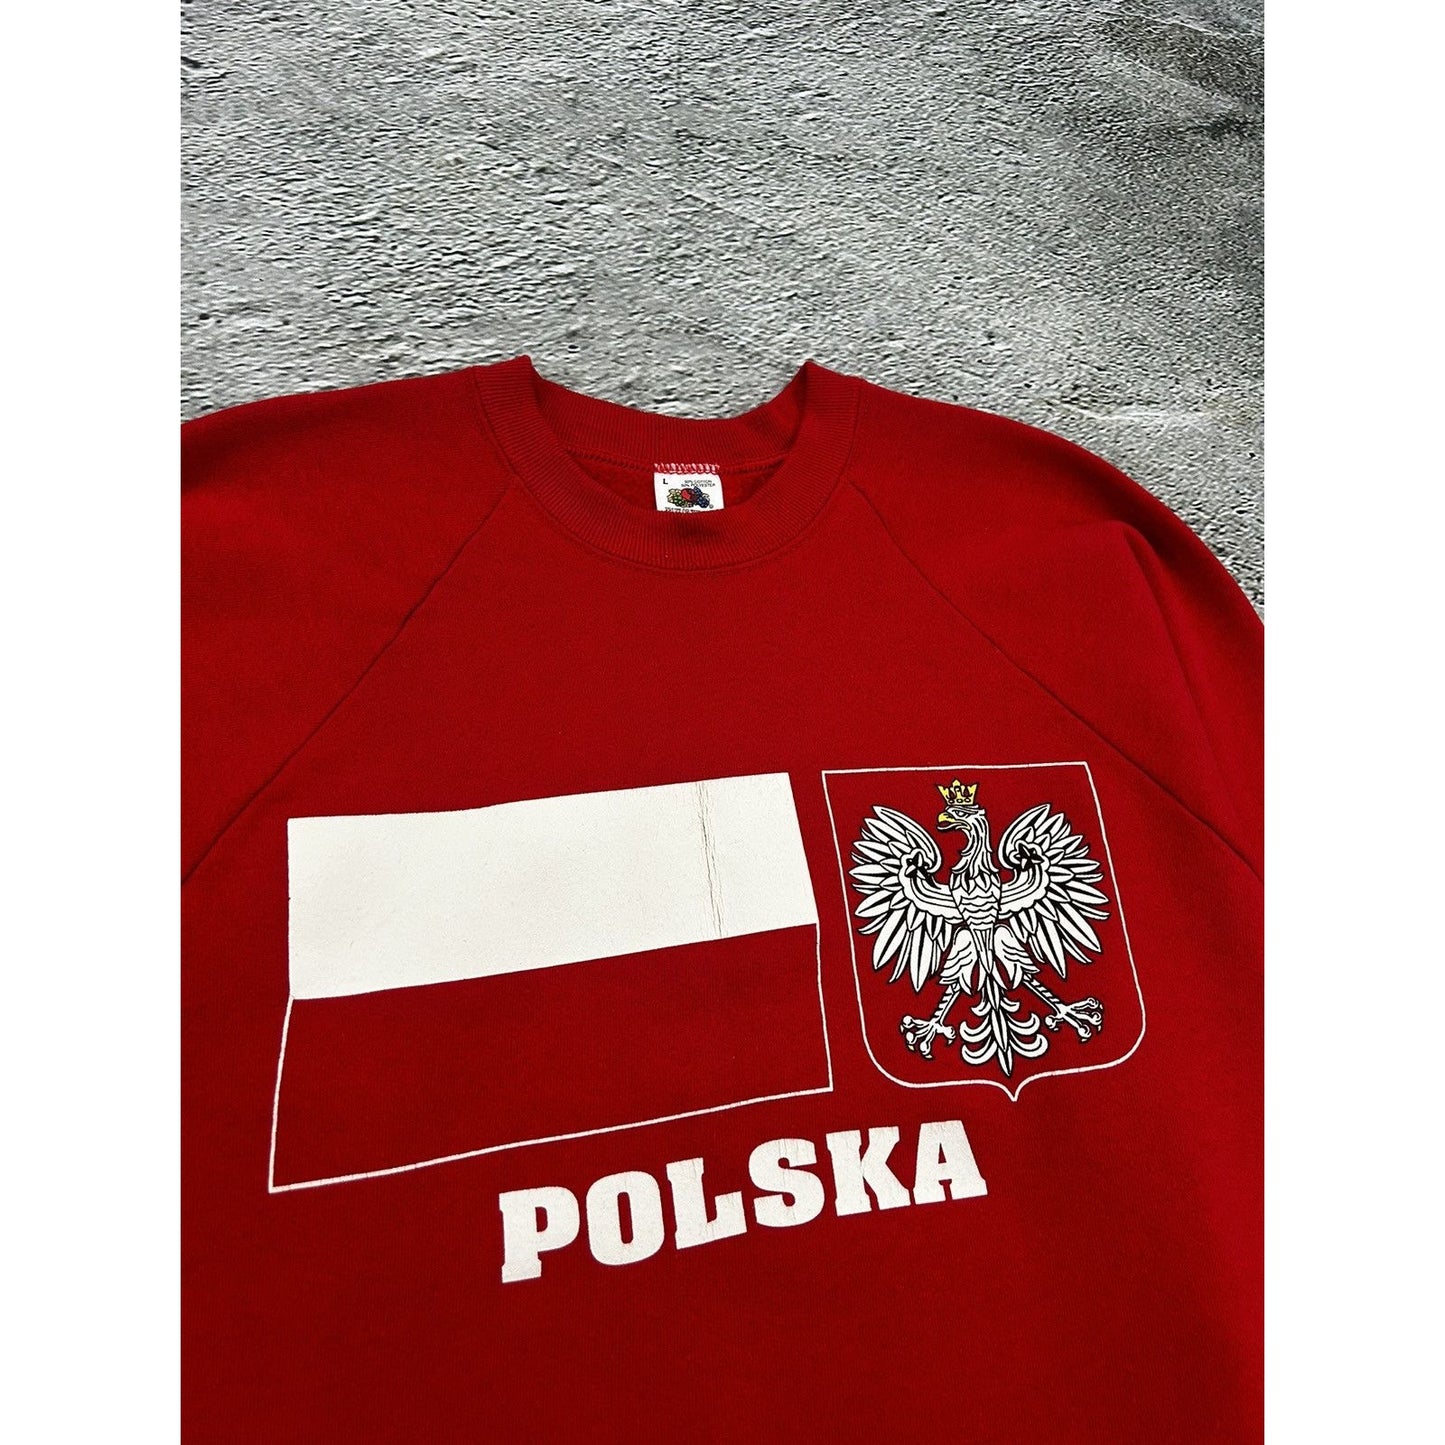 Poland sweatshirt big logo Vintage 90s Made in USA